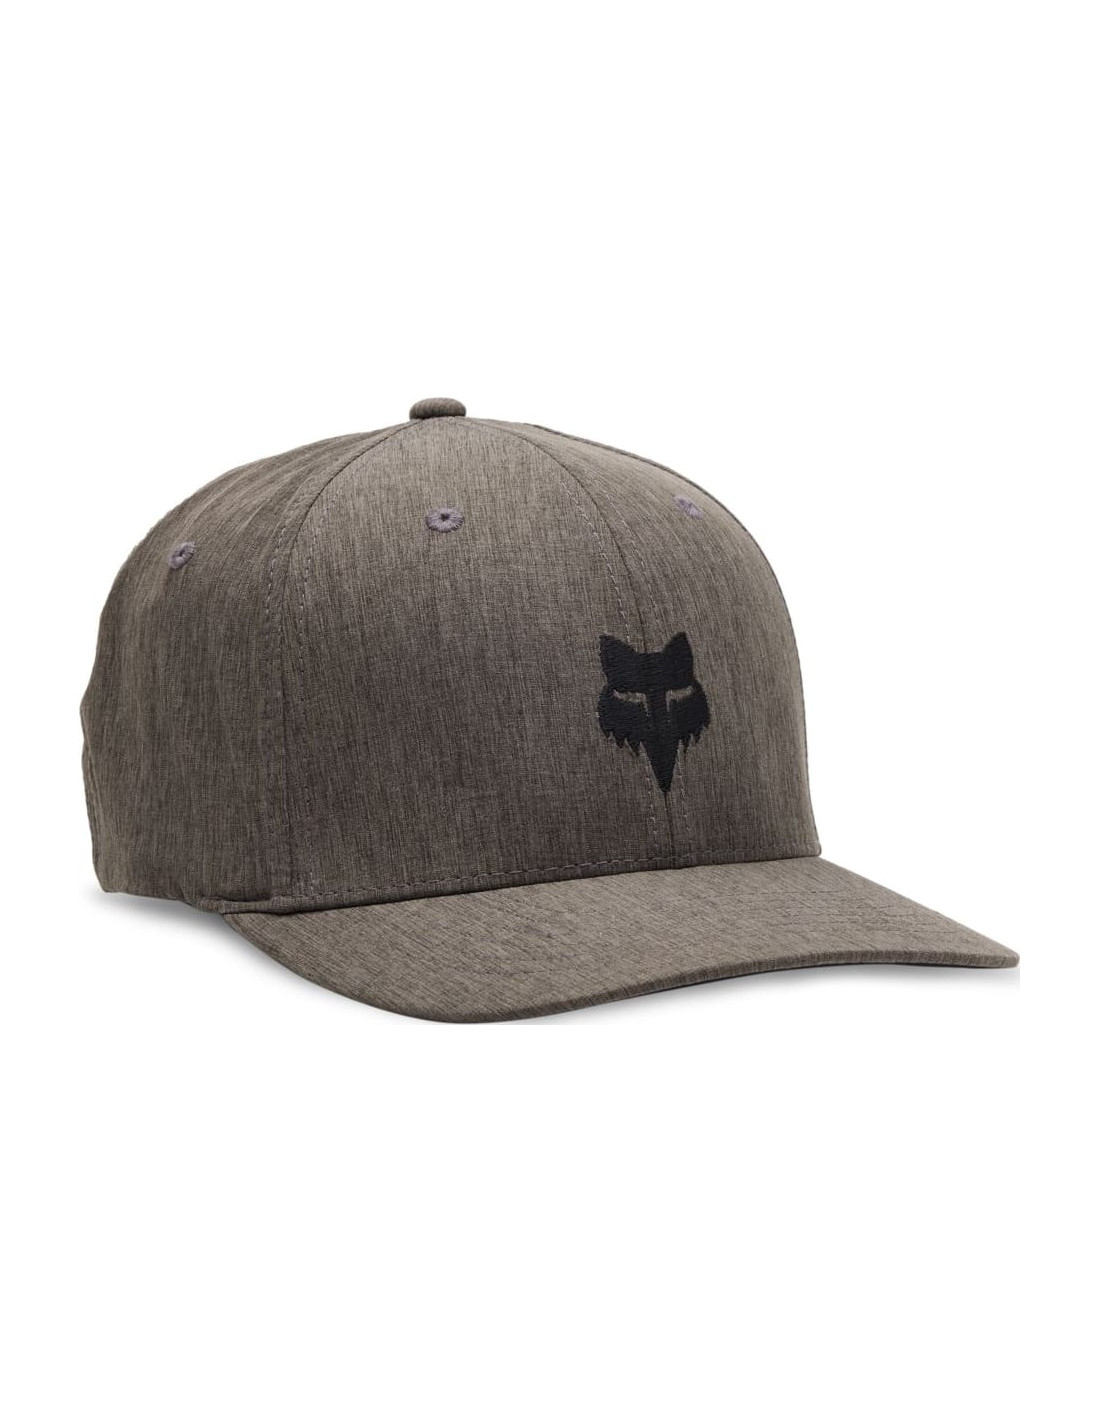 FOX HEAD SELECT FLEXFIT HAT